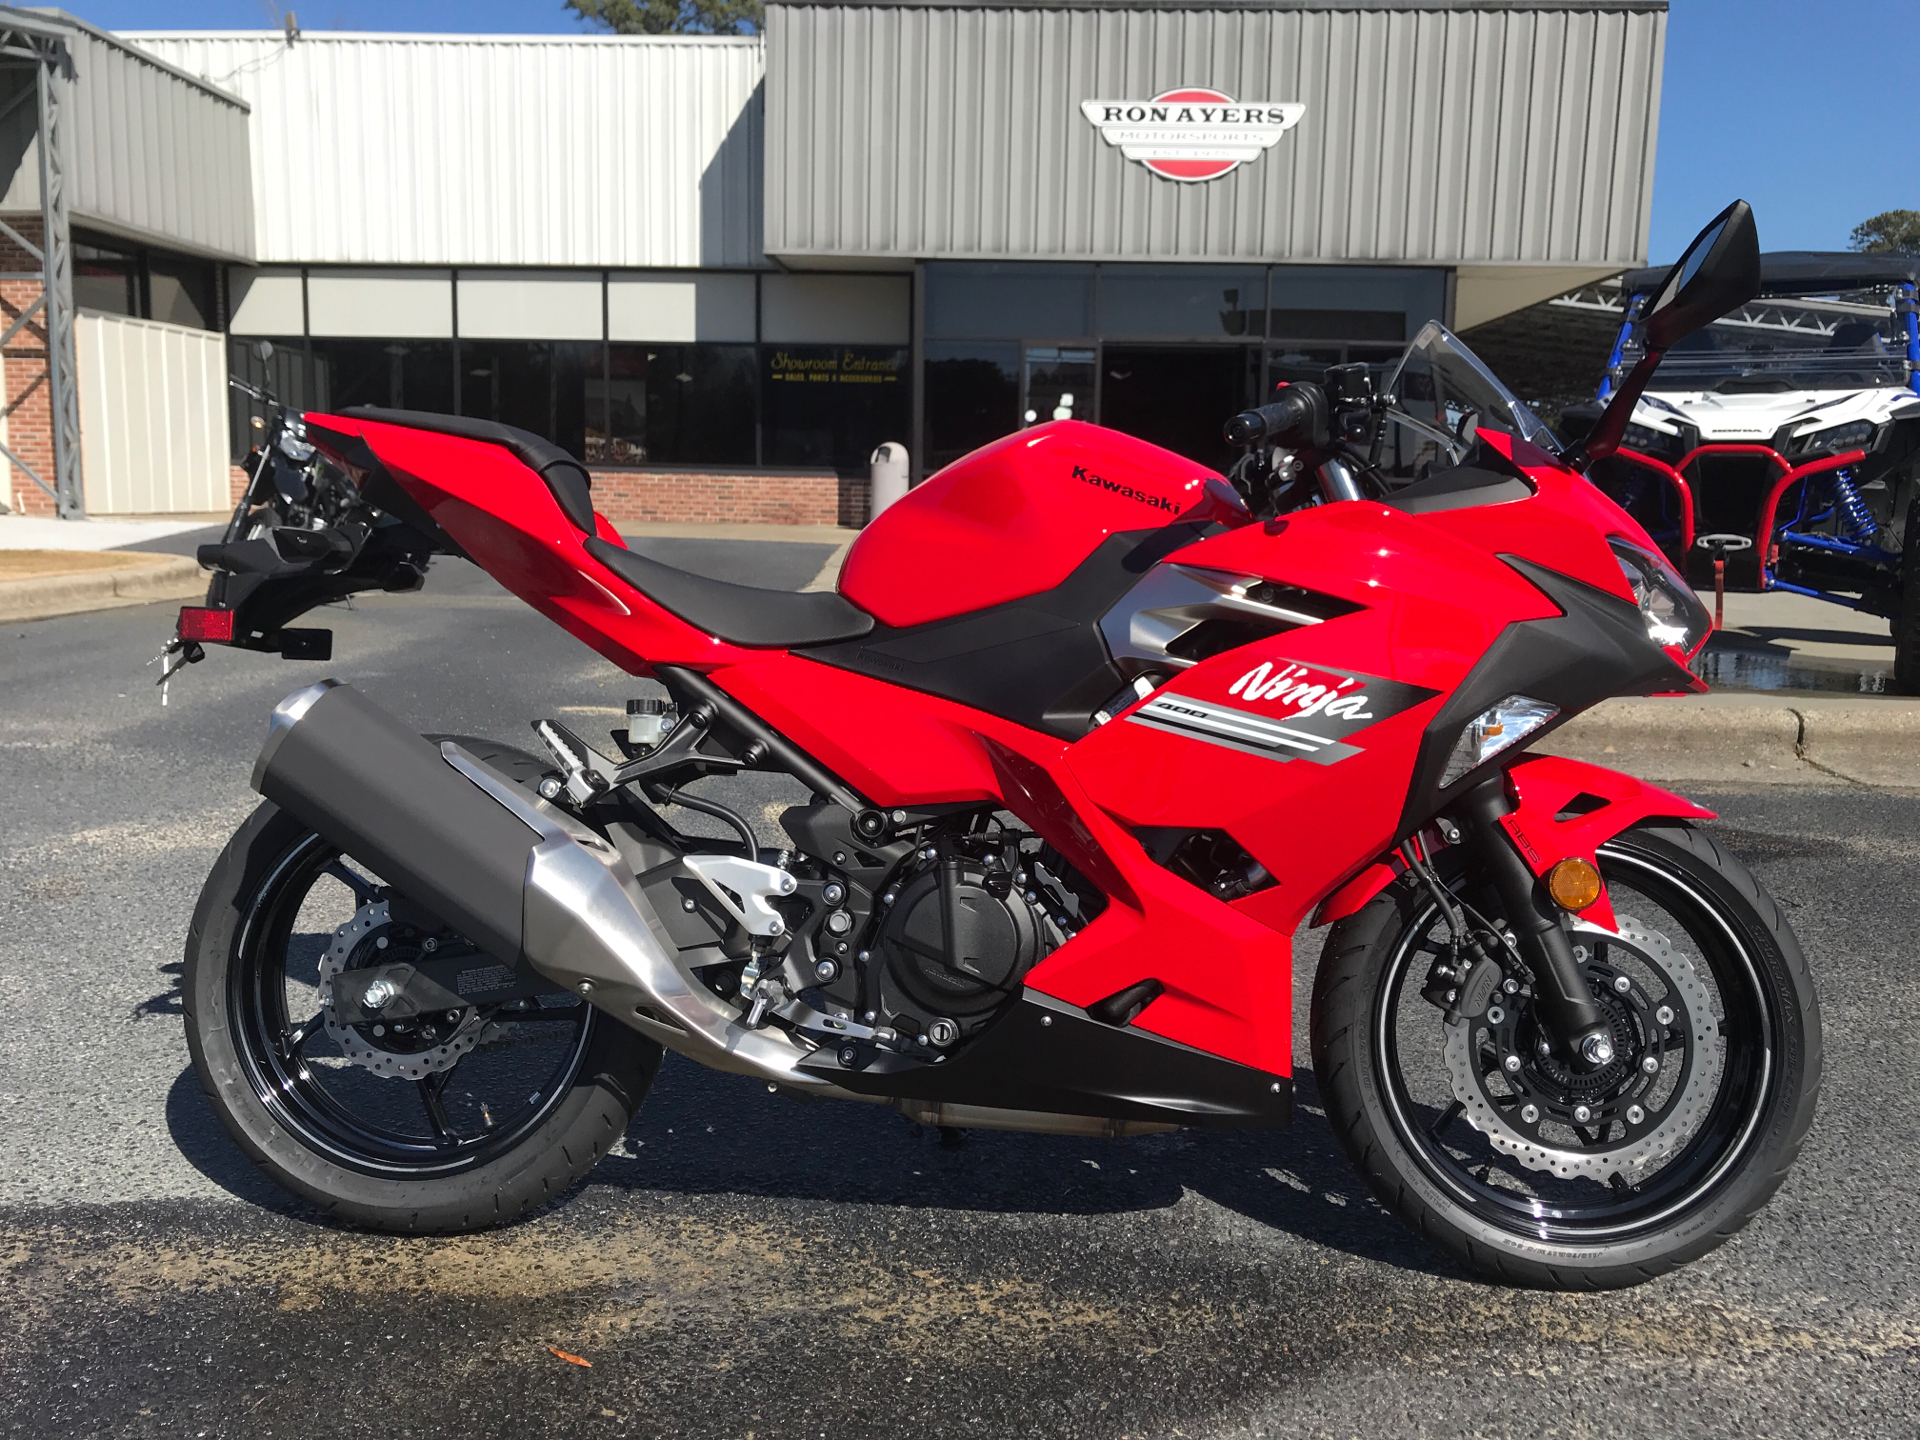 New 2021 Kawasaki Ninja 400 in Greenville, NC | Stock Number: N/A